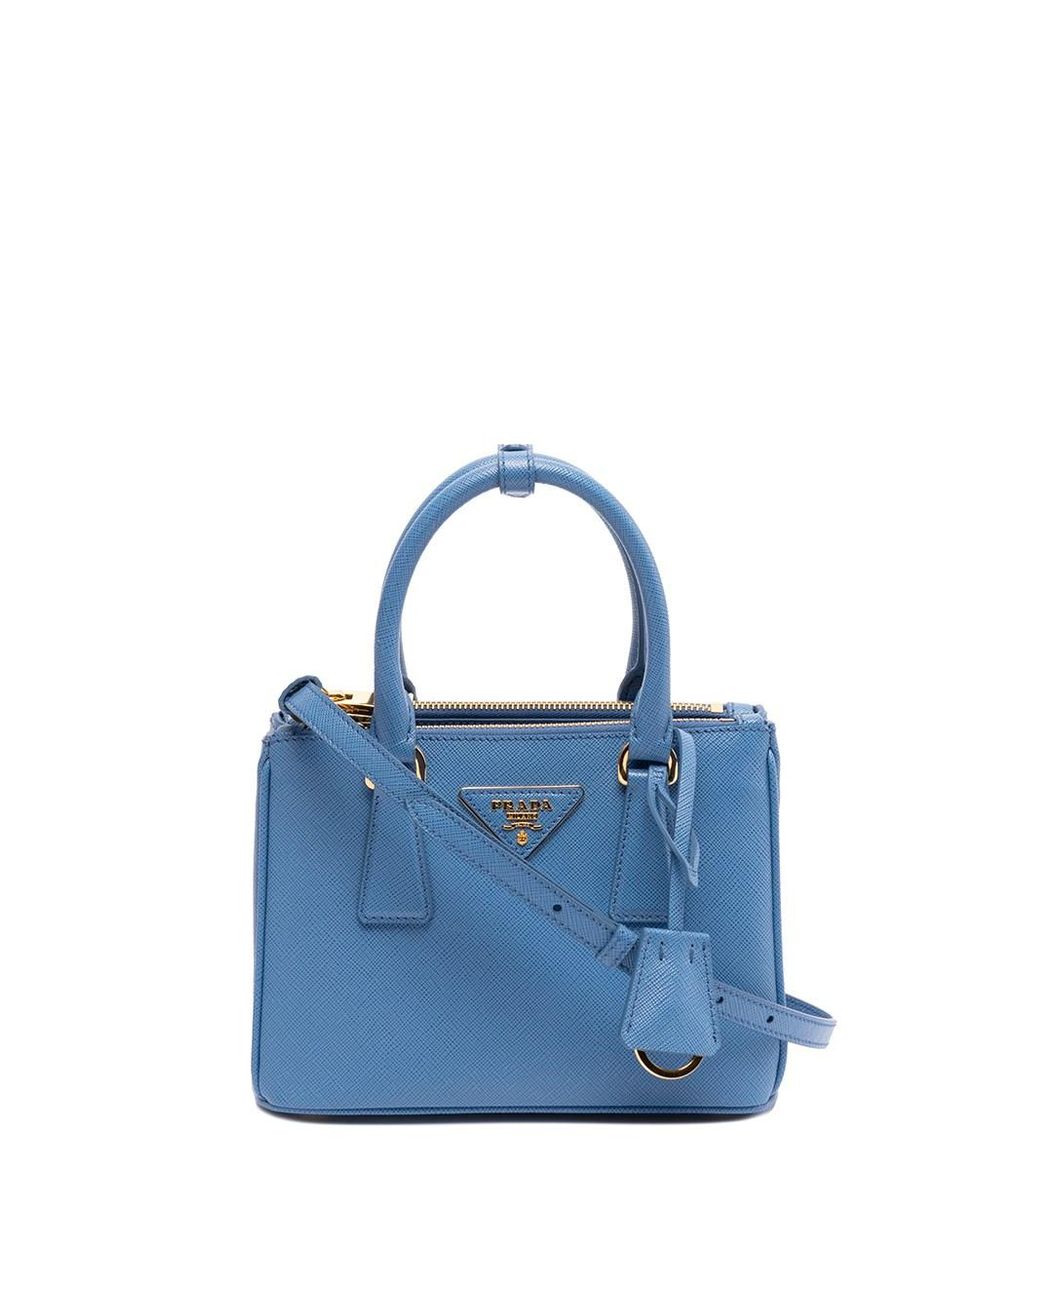 Prada Mini ` Galleria` Saffiano Leather Bag in Blue | Lyst